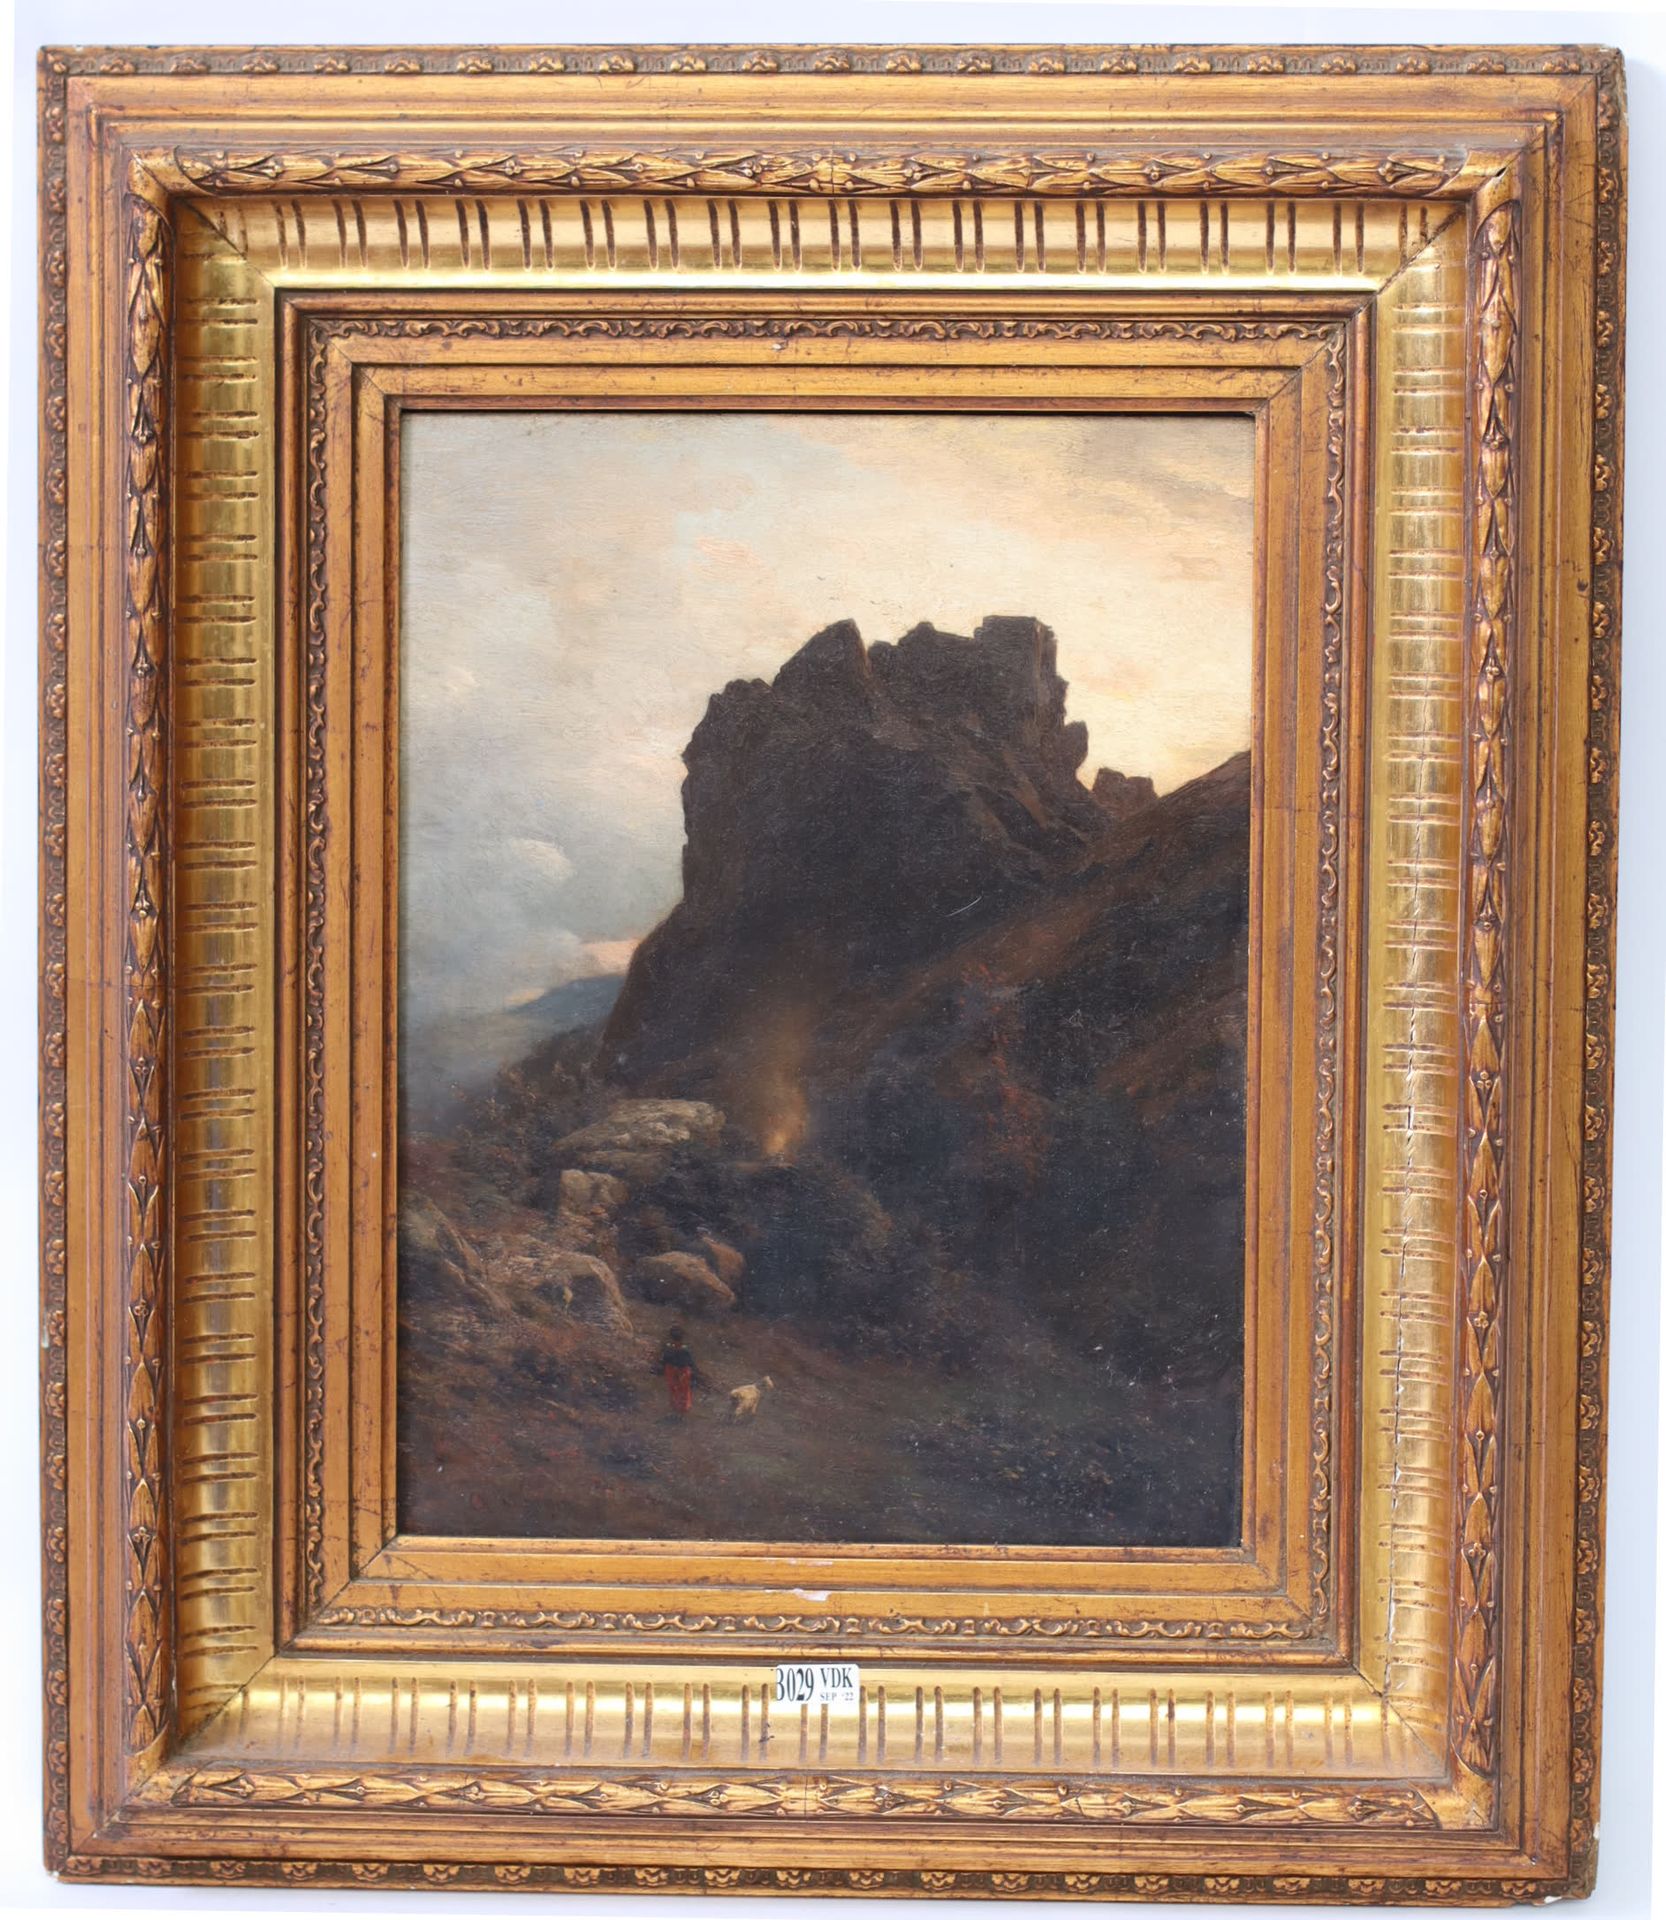 Null 油画板上的 "动画的山地风景"。签署了A.海恩(?)。_x000D_

年代：19世纪。尺寸：35x26厘米。